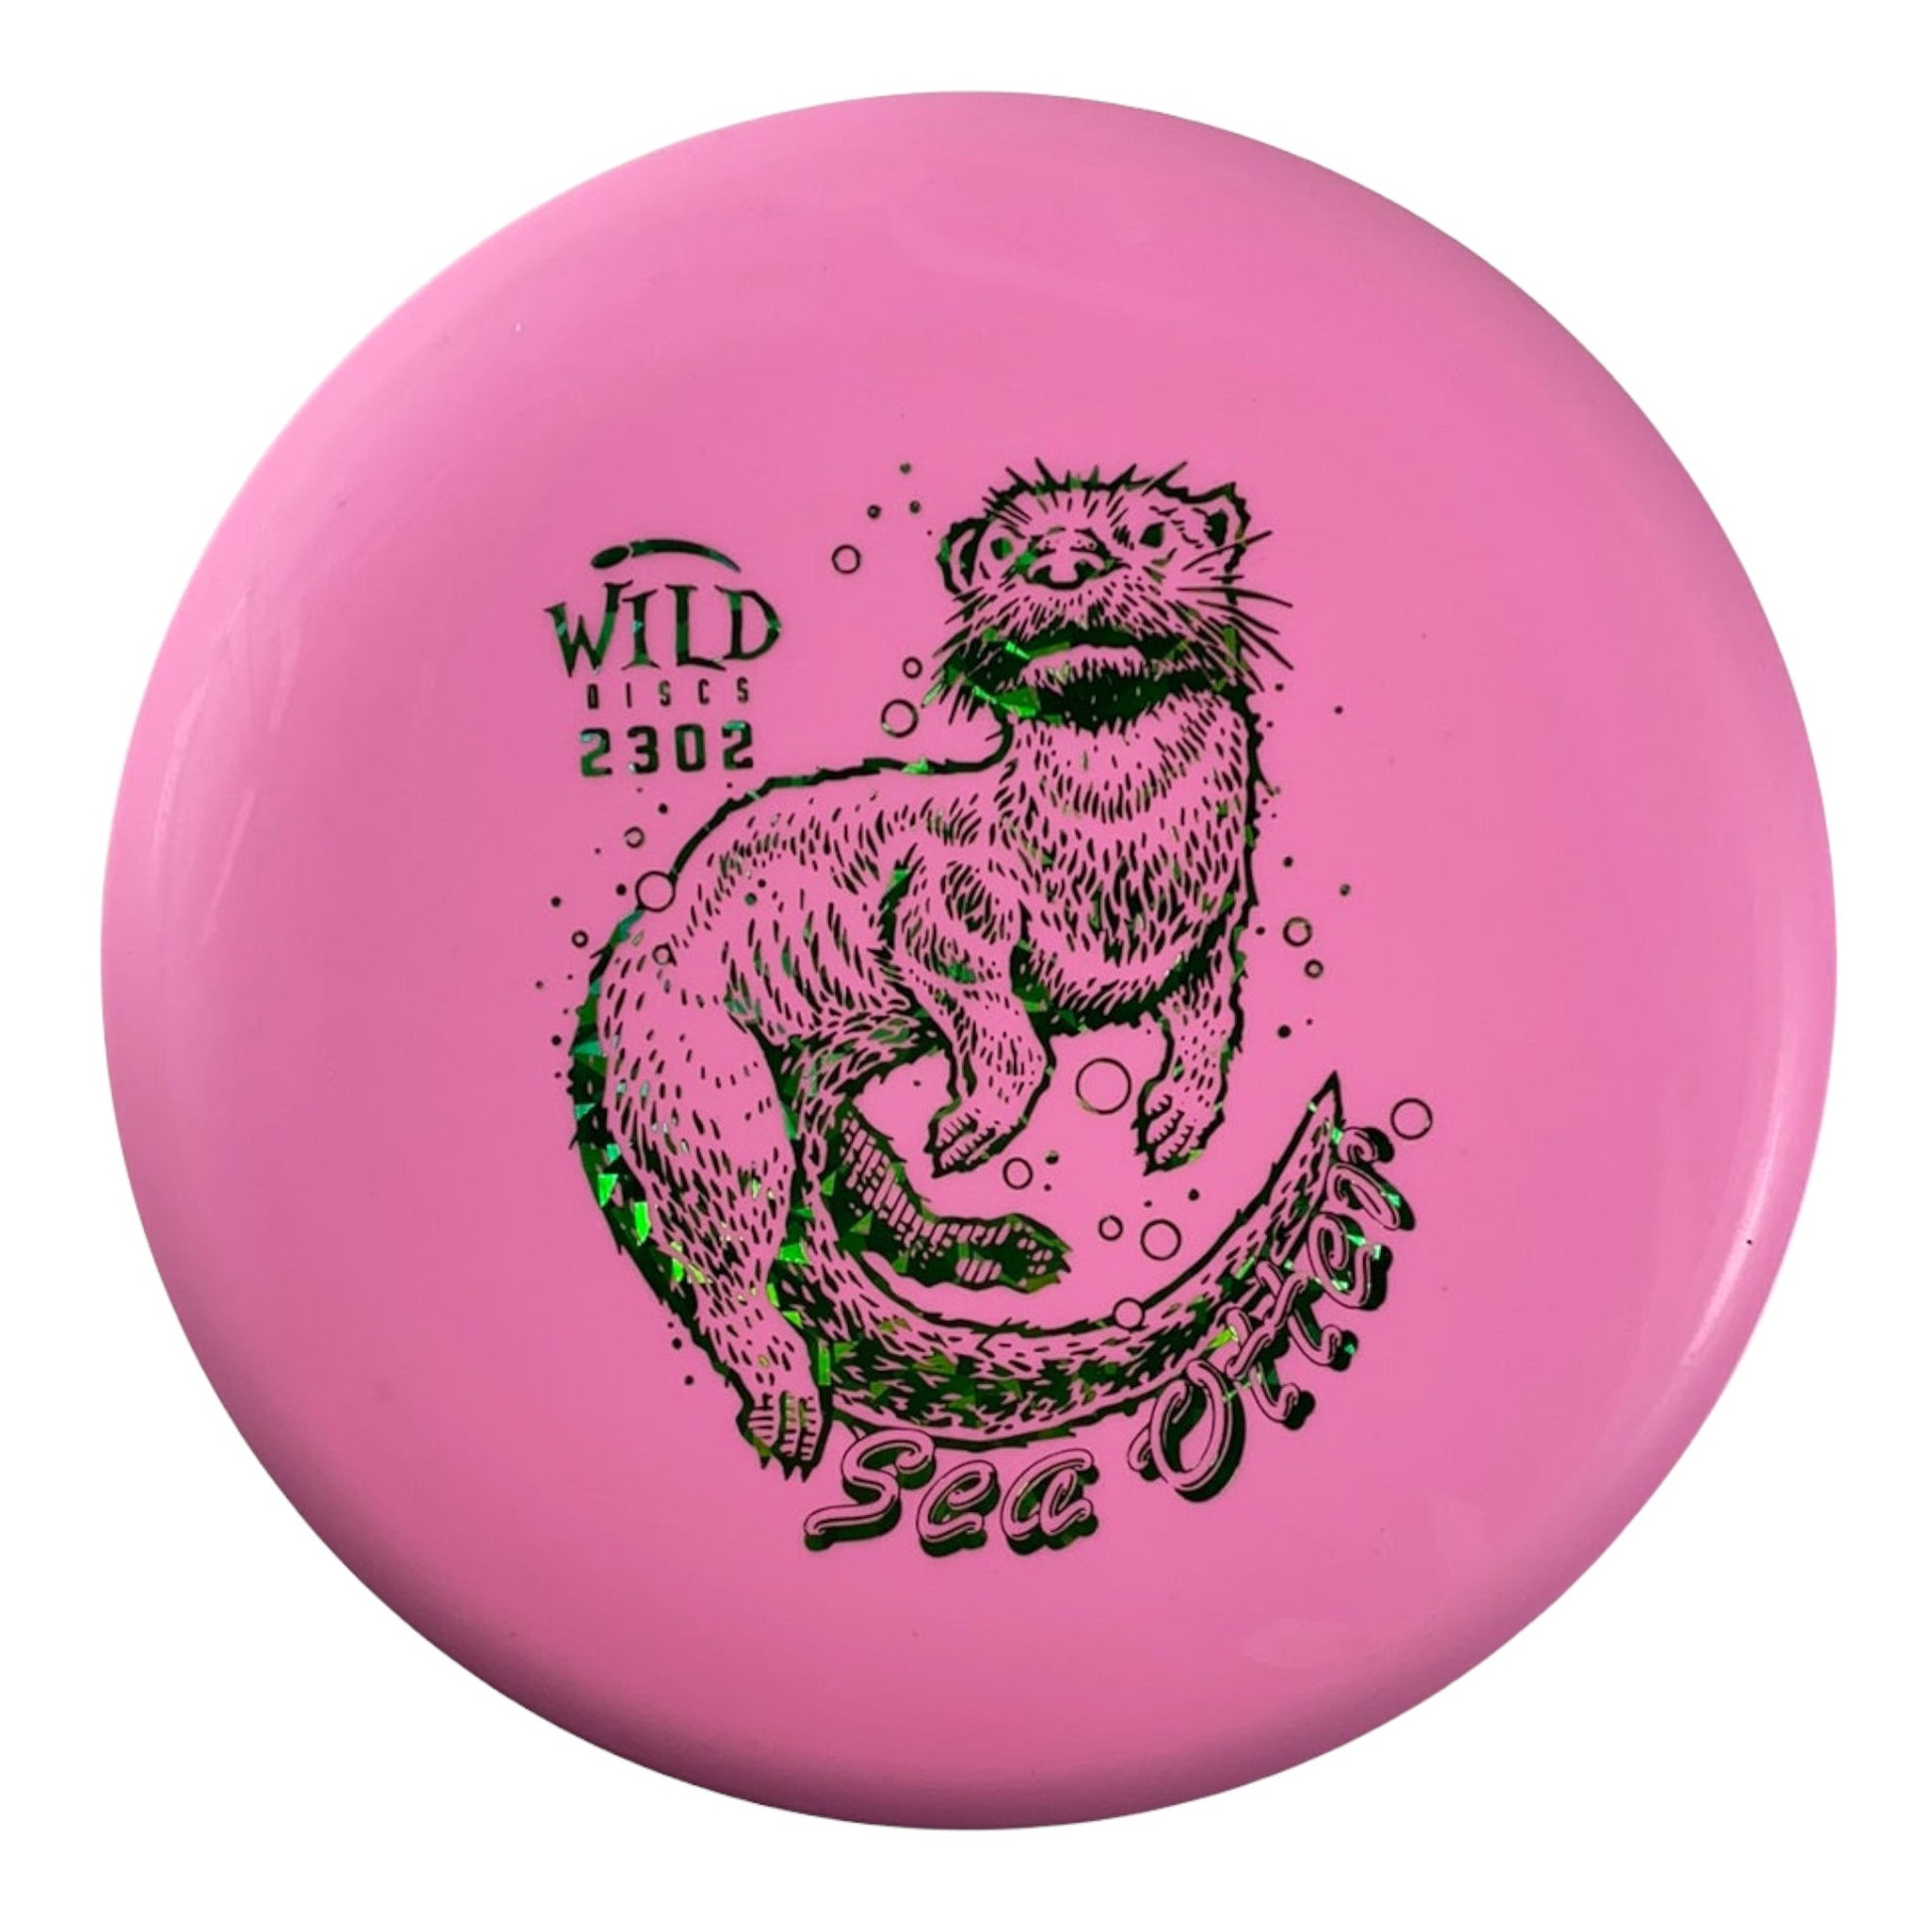 Wild Discs Sea Otter | Landslide | Pink/Green 173g Disc Golf